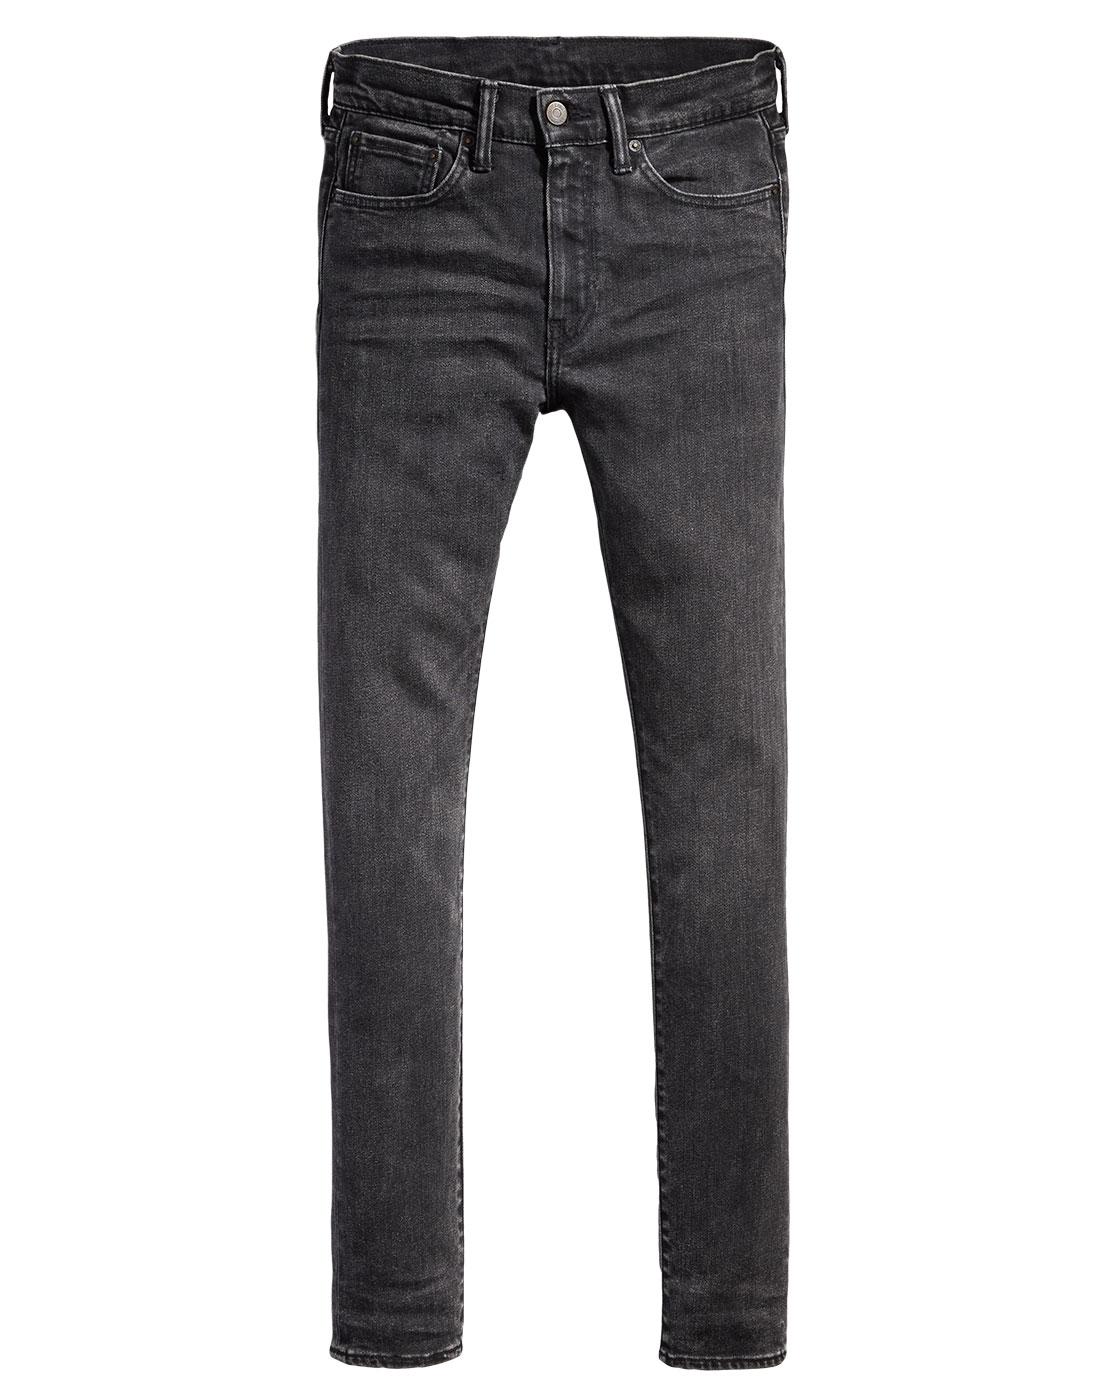 LEVI'S 519 Retro Mod Extreme Skinny Fit Denim Jeans Basement